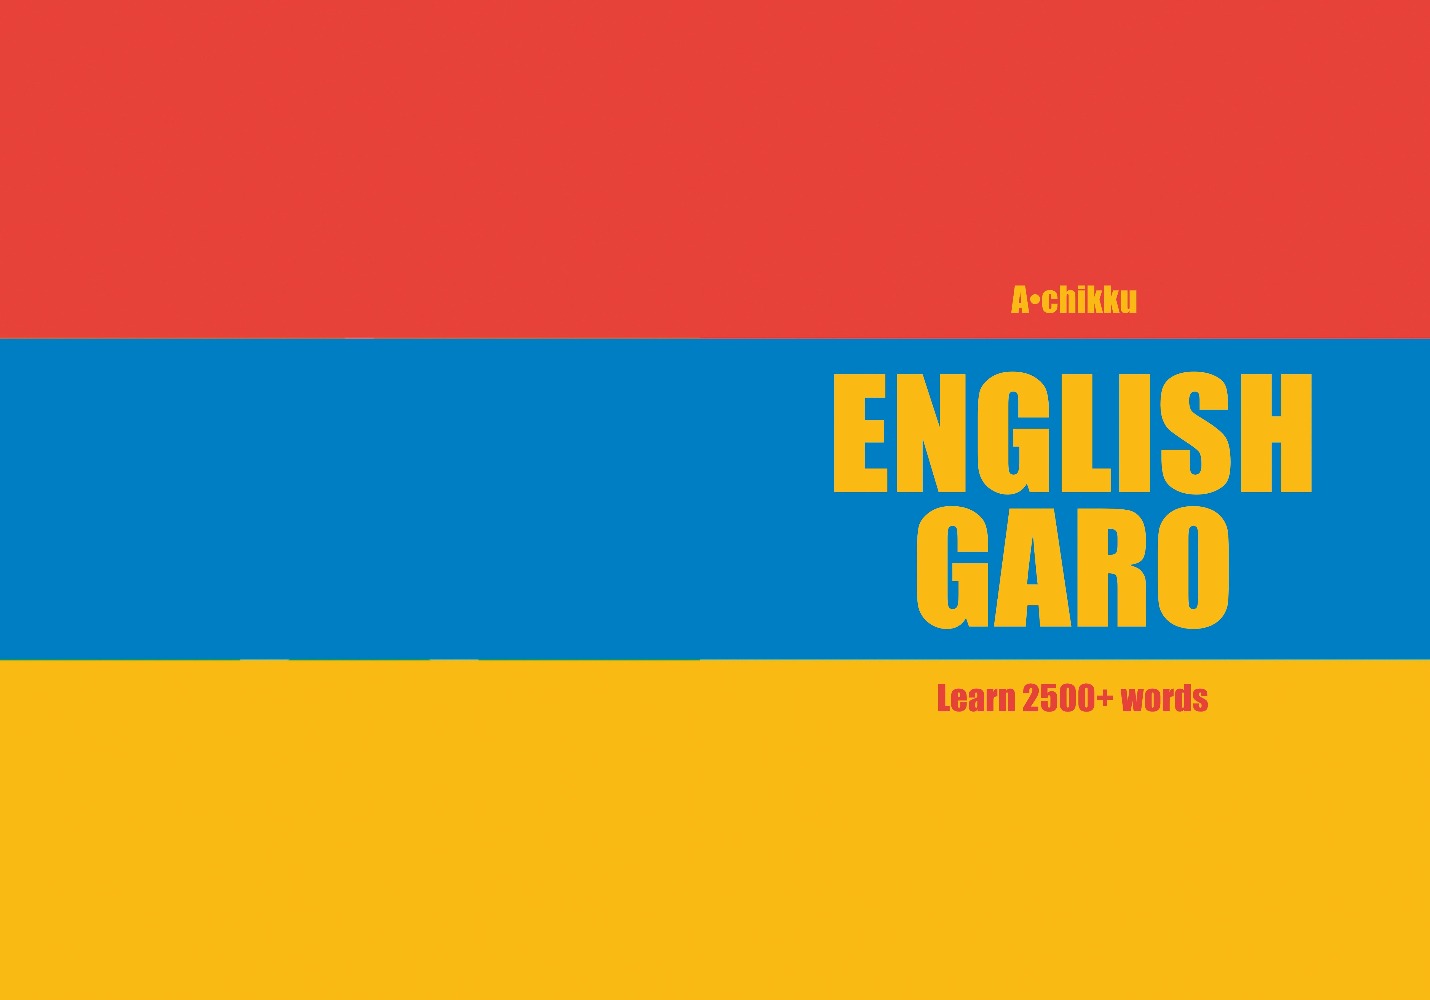 Garo language learning notebook cover